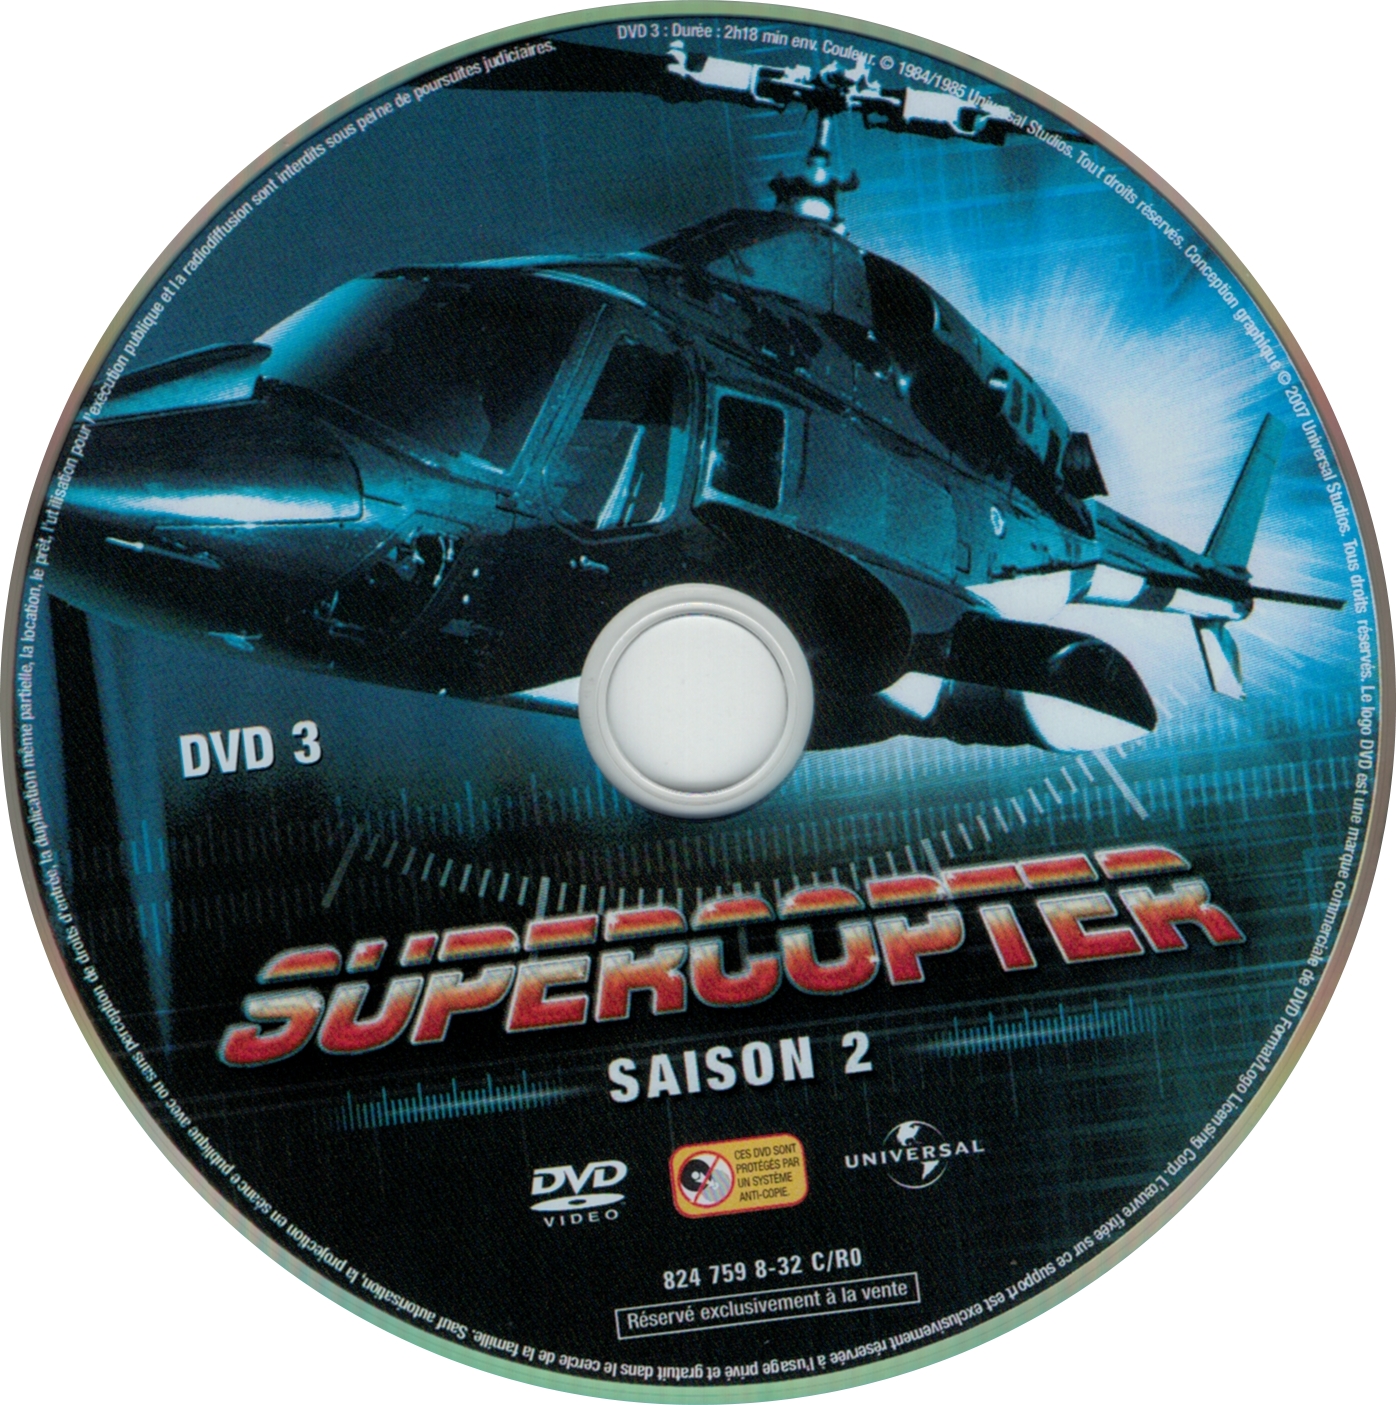 Supercopter Saison 2 DVD 3